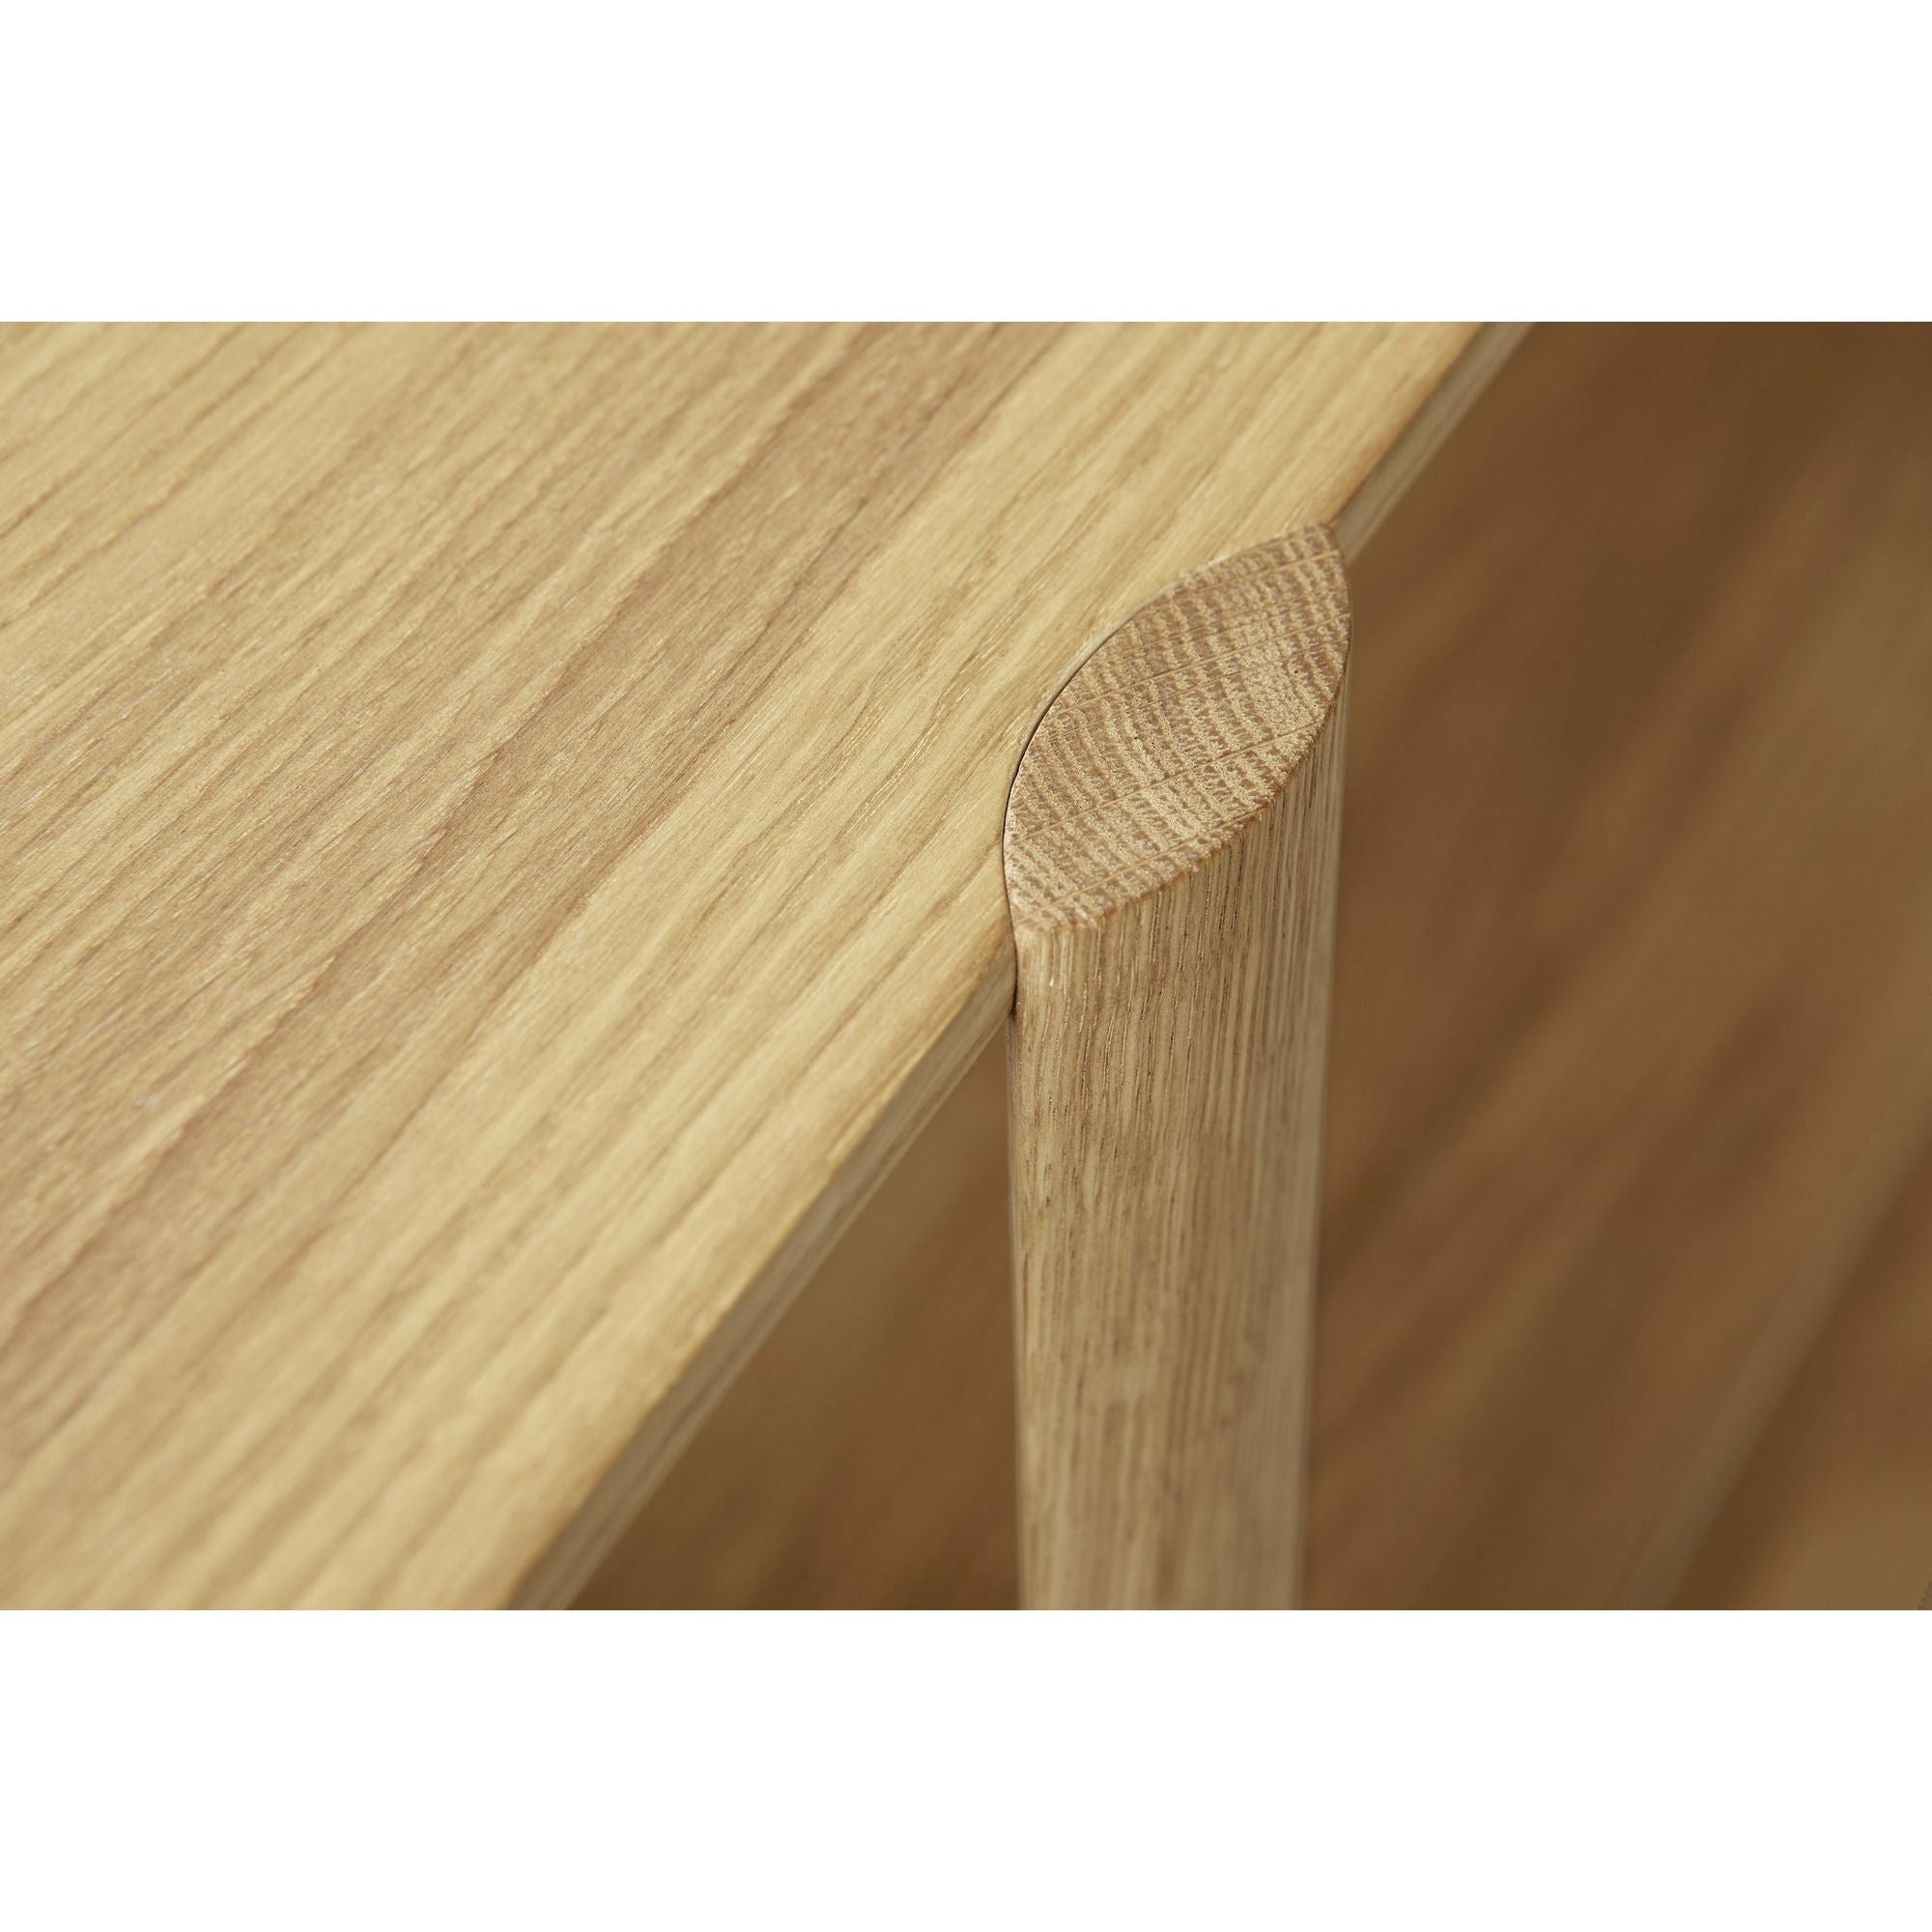 Form & Refine Leaf Shelf 2x2. White Oil Oak